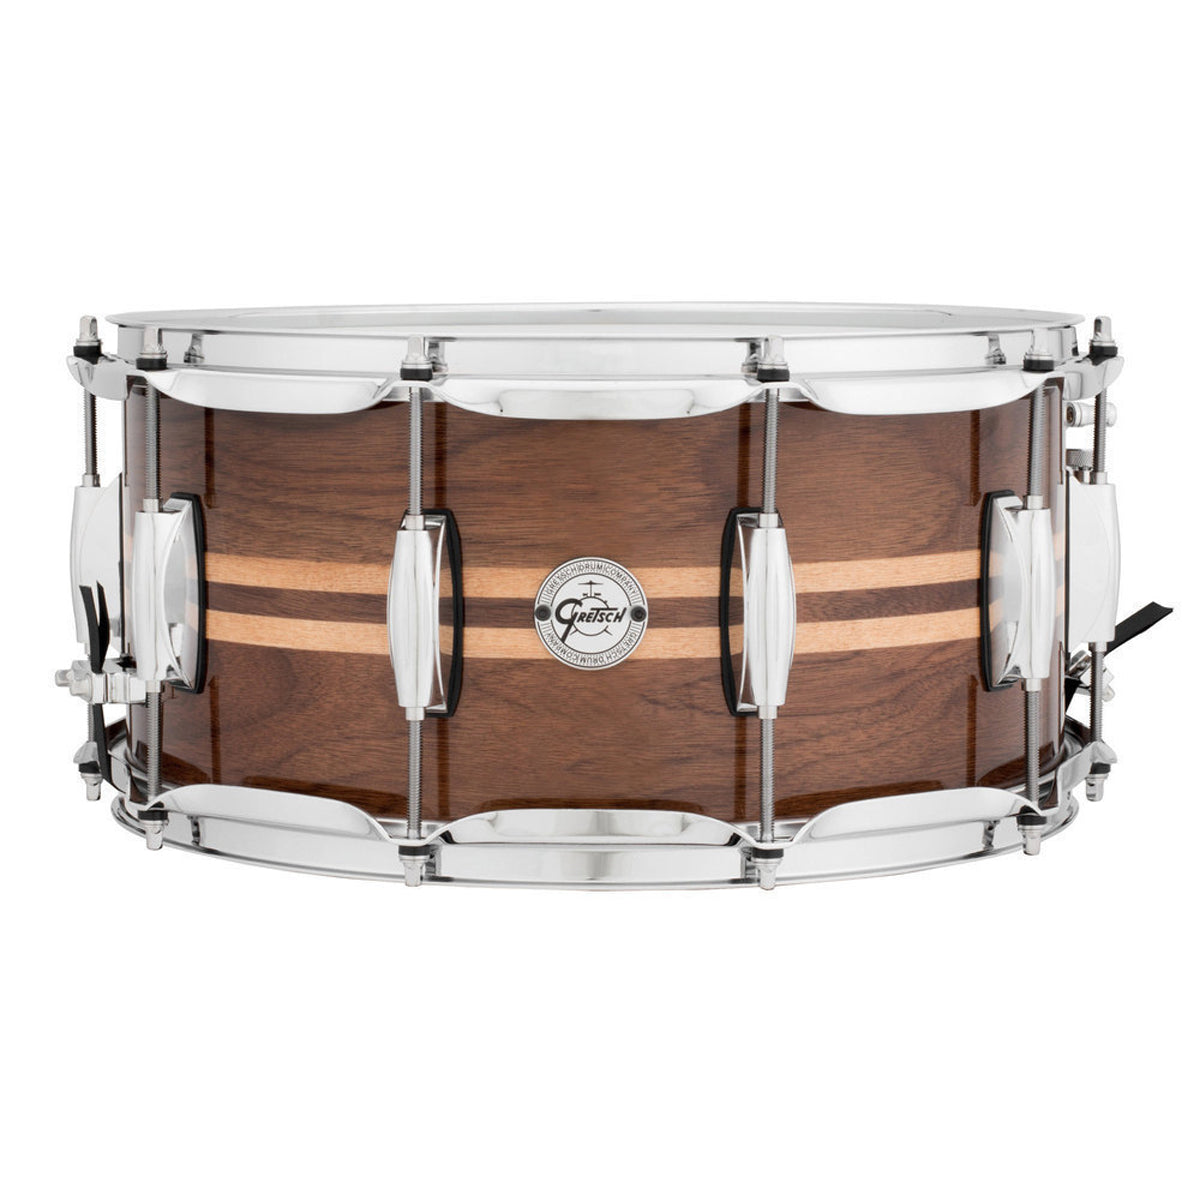 Gretsch "Full Range" 14" x 6.5" Walnut Snare Drum with Maple Inlay